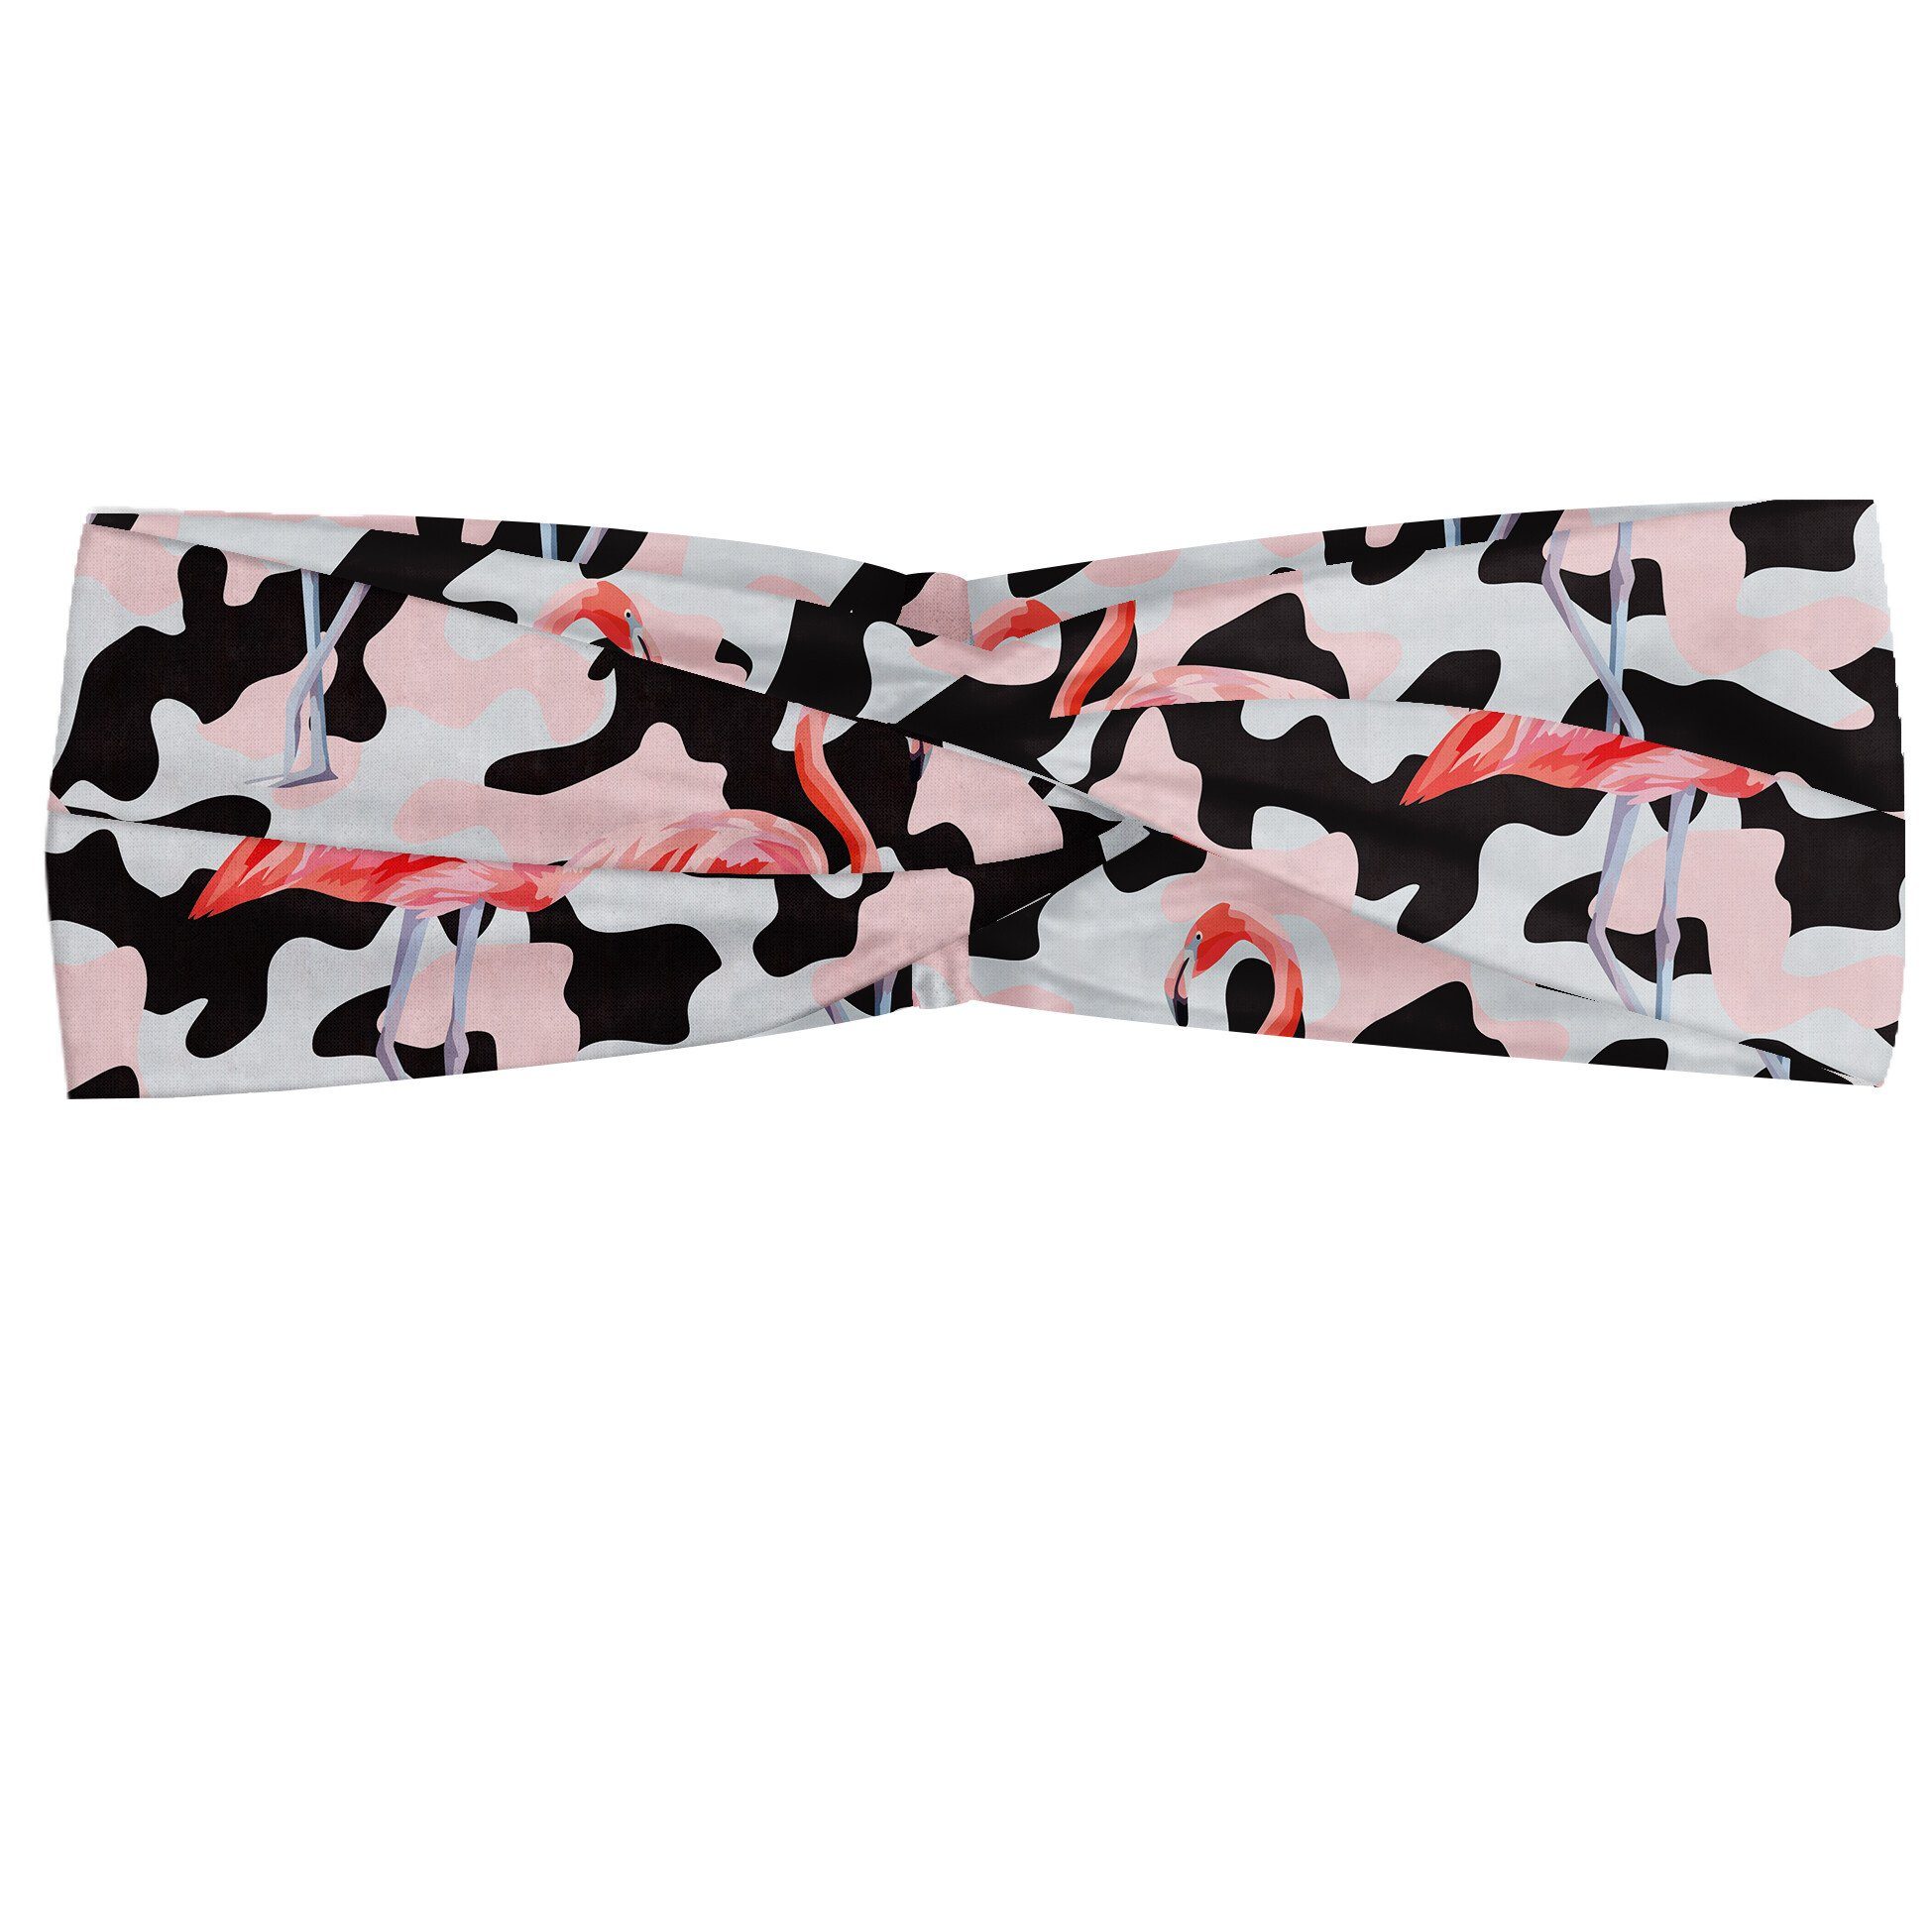 Abakuhaus Stirnband Elastisch und Angenehme alltags accessories Flamingo Aquarell Natur Camo